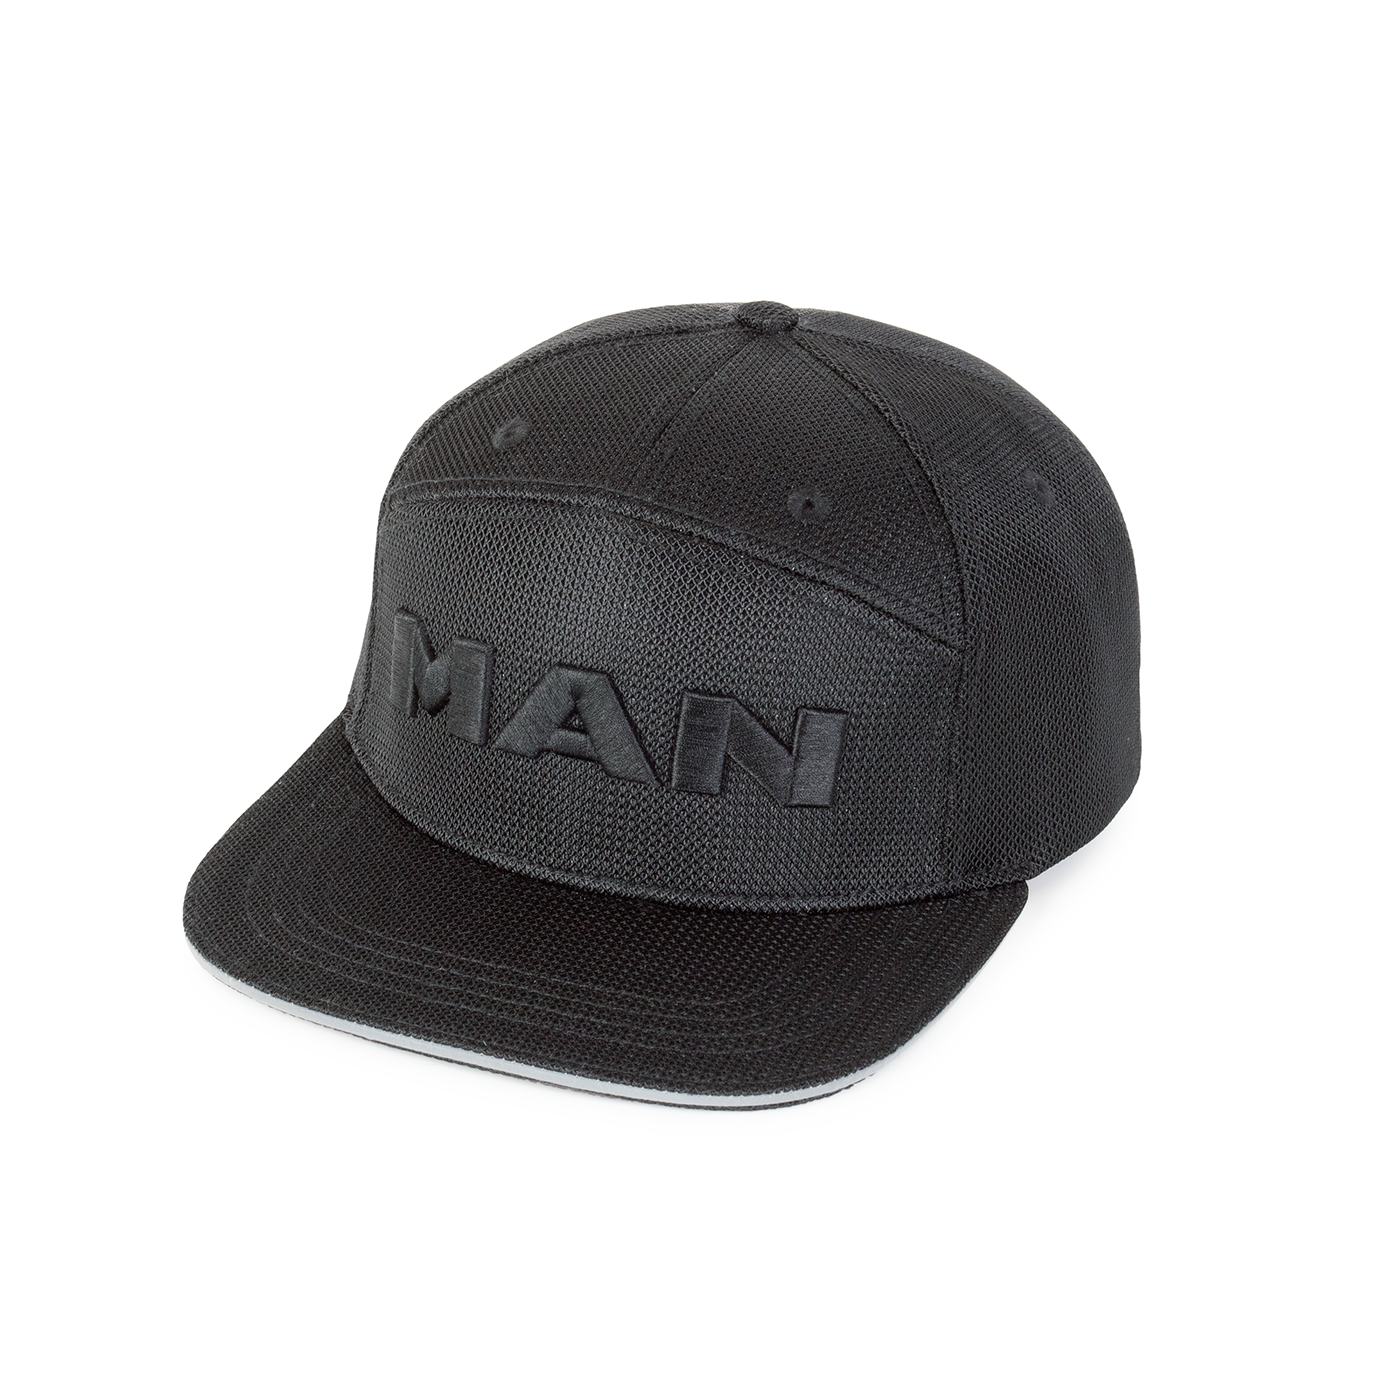 MAN Black Edition Unisex Flat cap